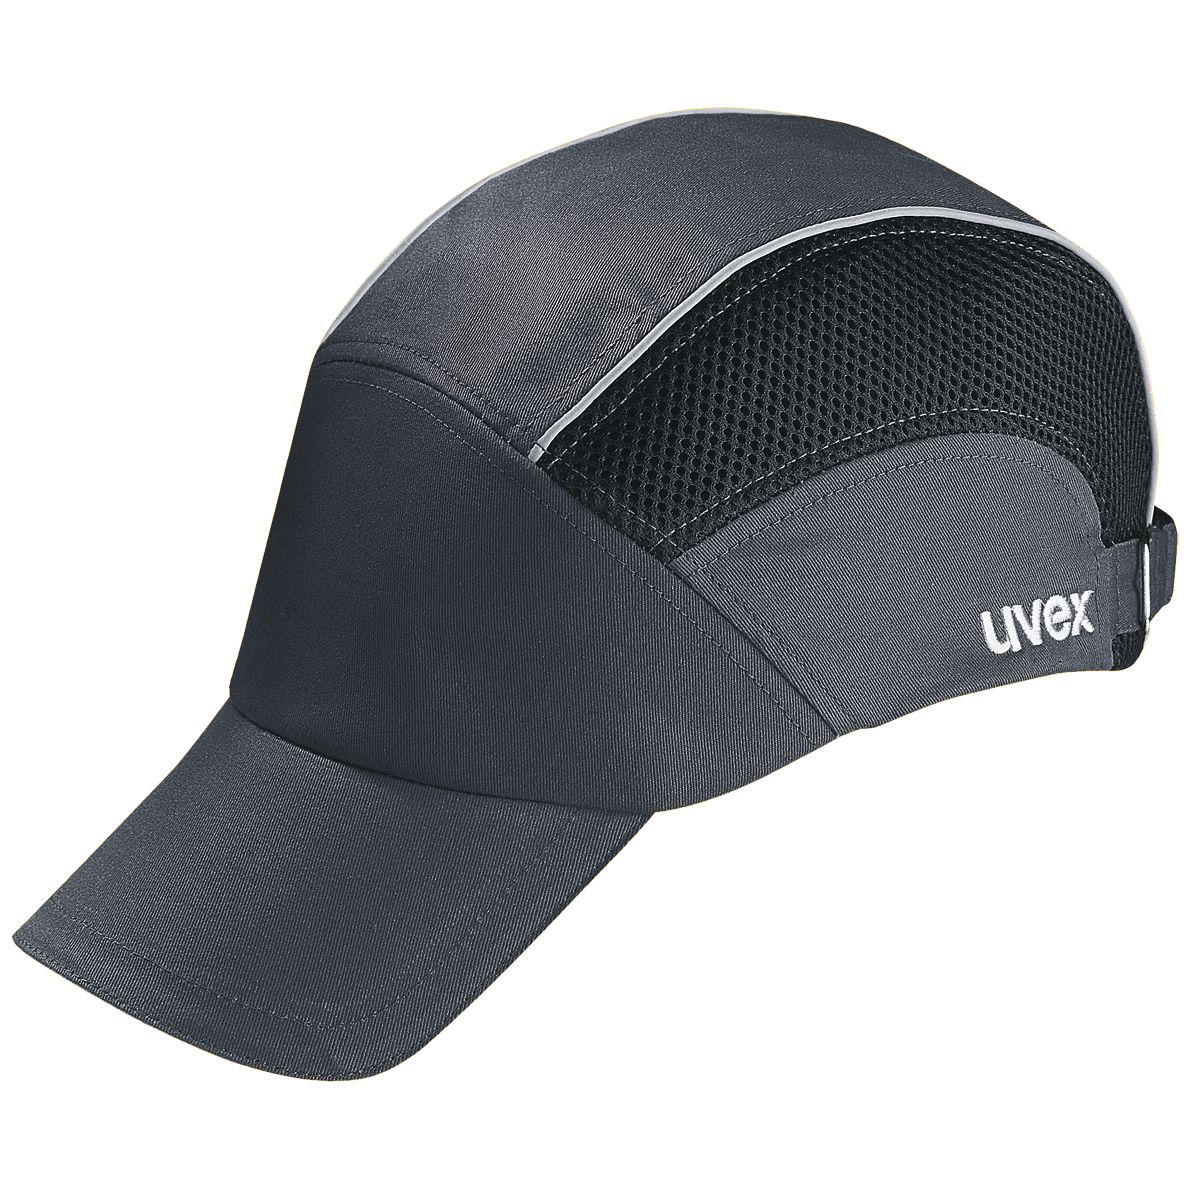 uvex u-cap premium u-style bump cap - Comfortable protective cap with long peak - for construction & industry - EN 812